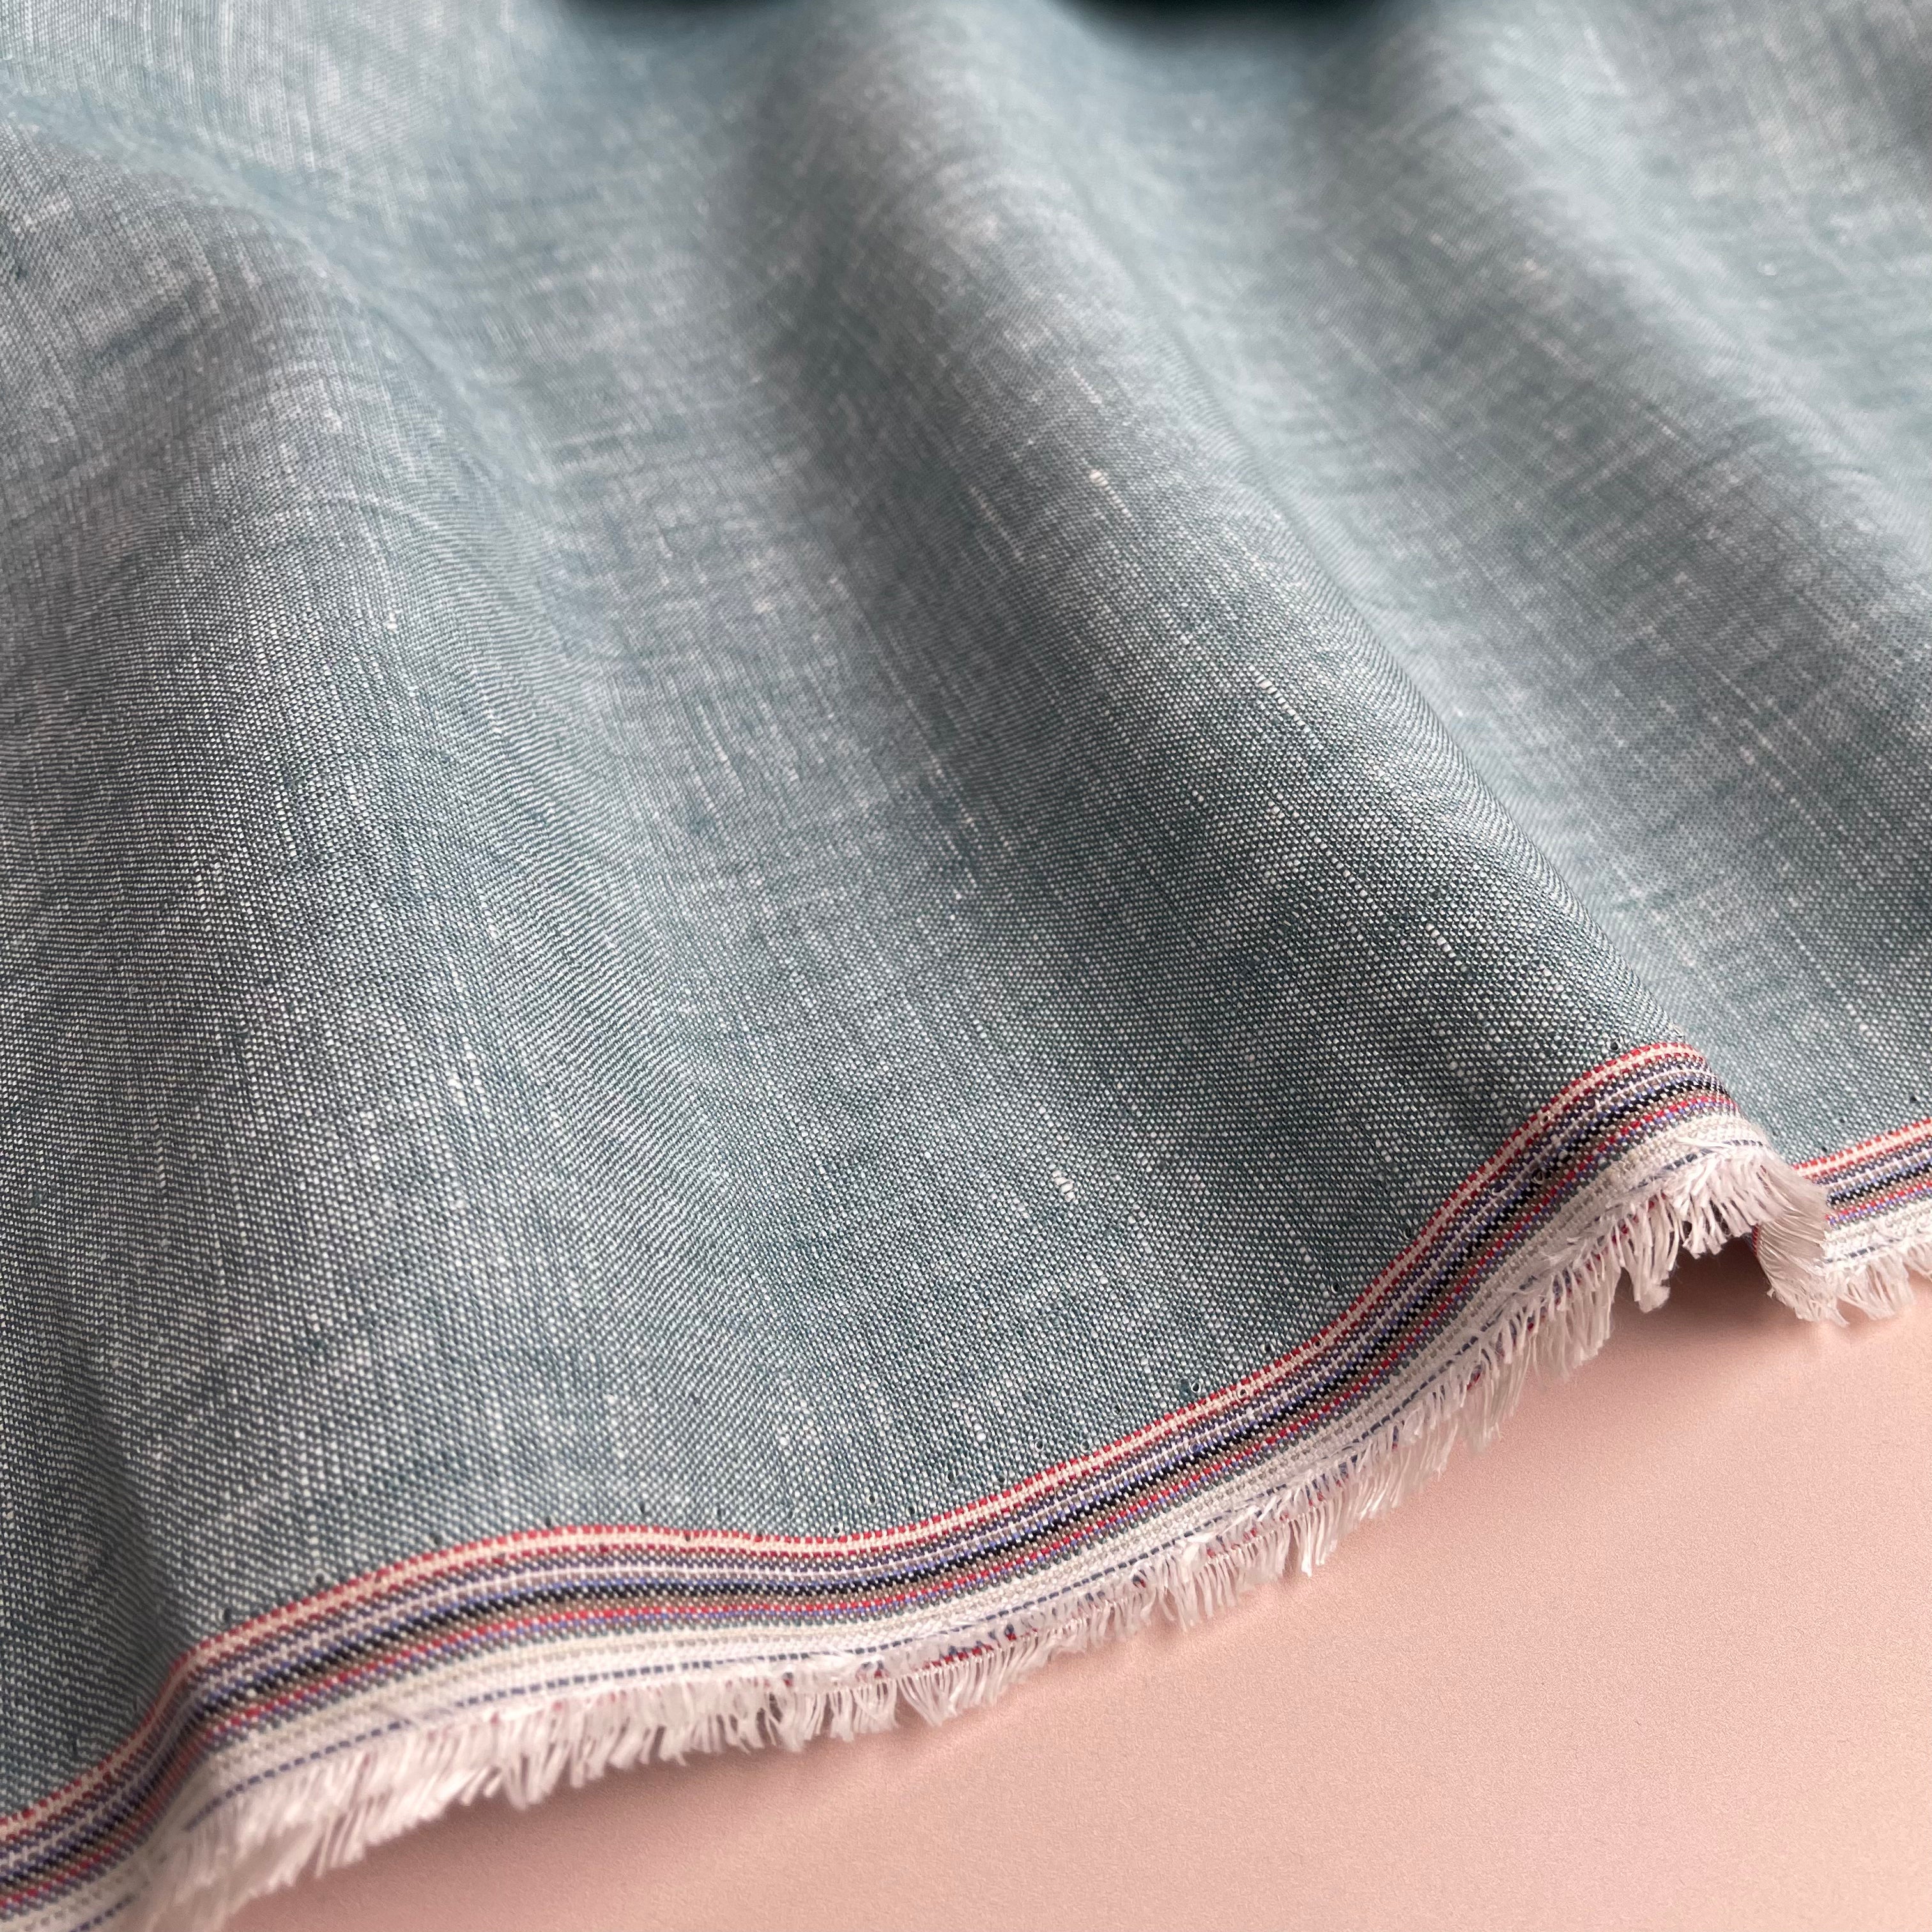 Sea Blue Yarn Dyed Pure Linen Fabric